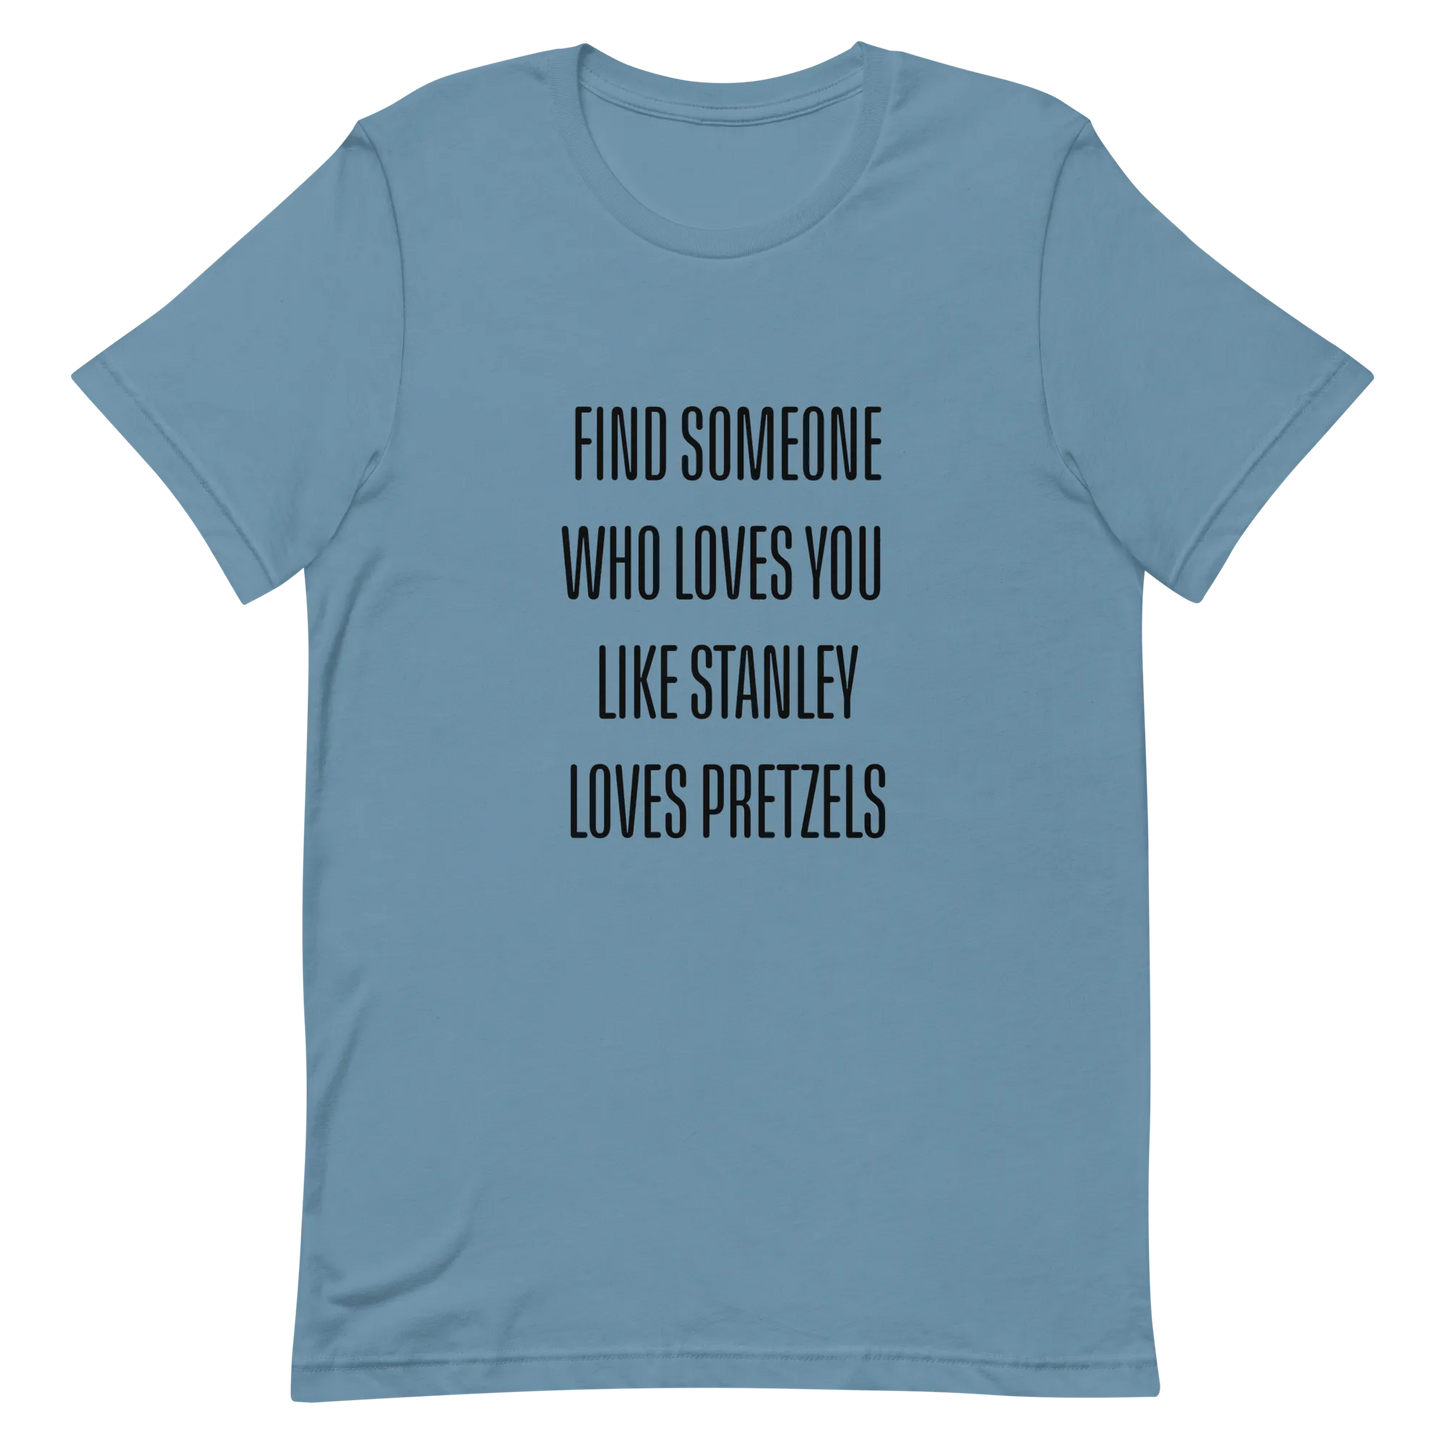 Stanley Loves Pretzels Tee in Steel Blue flatlay